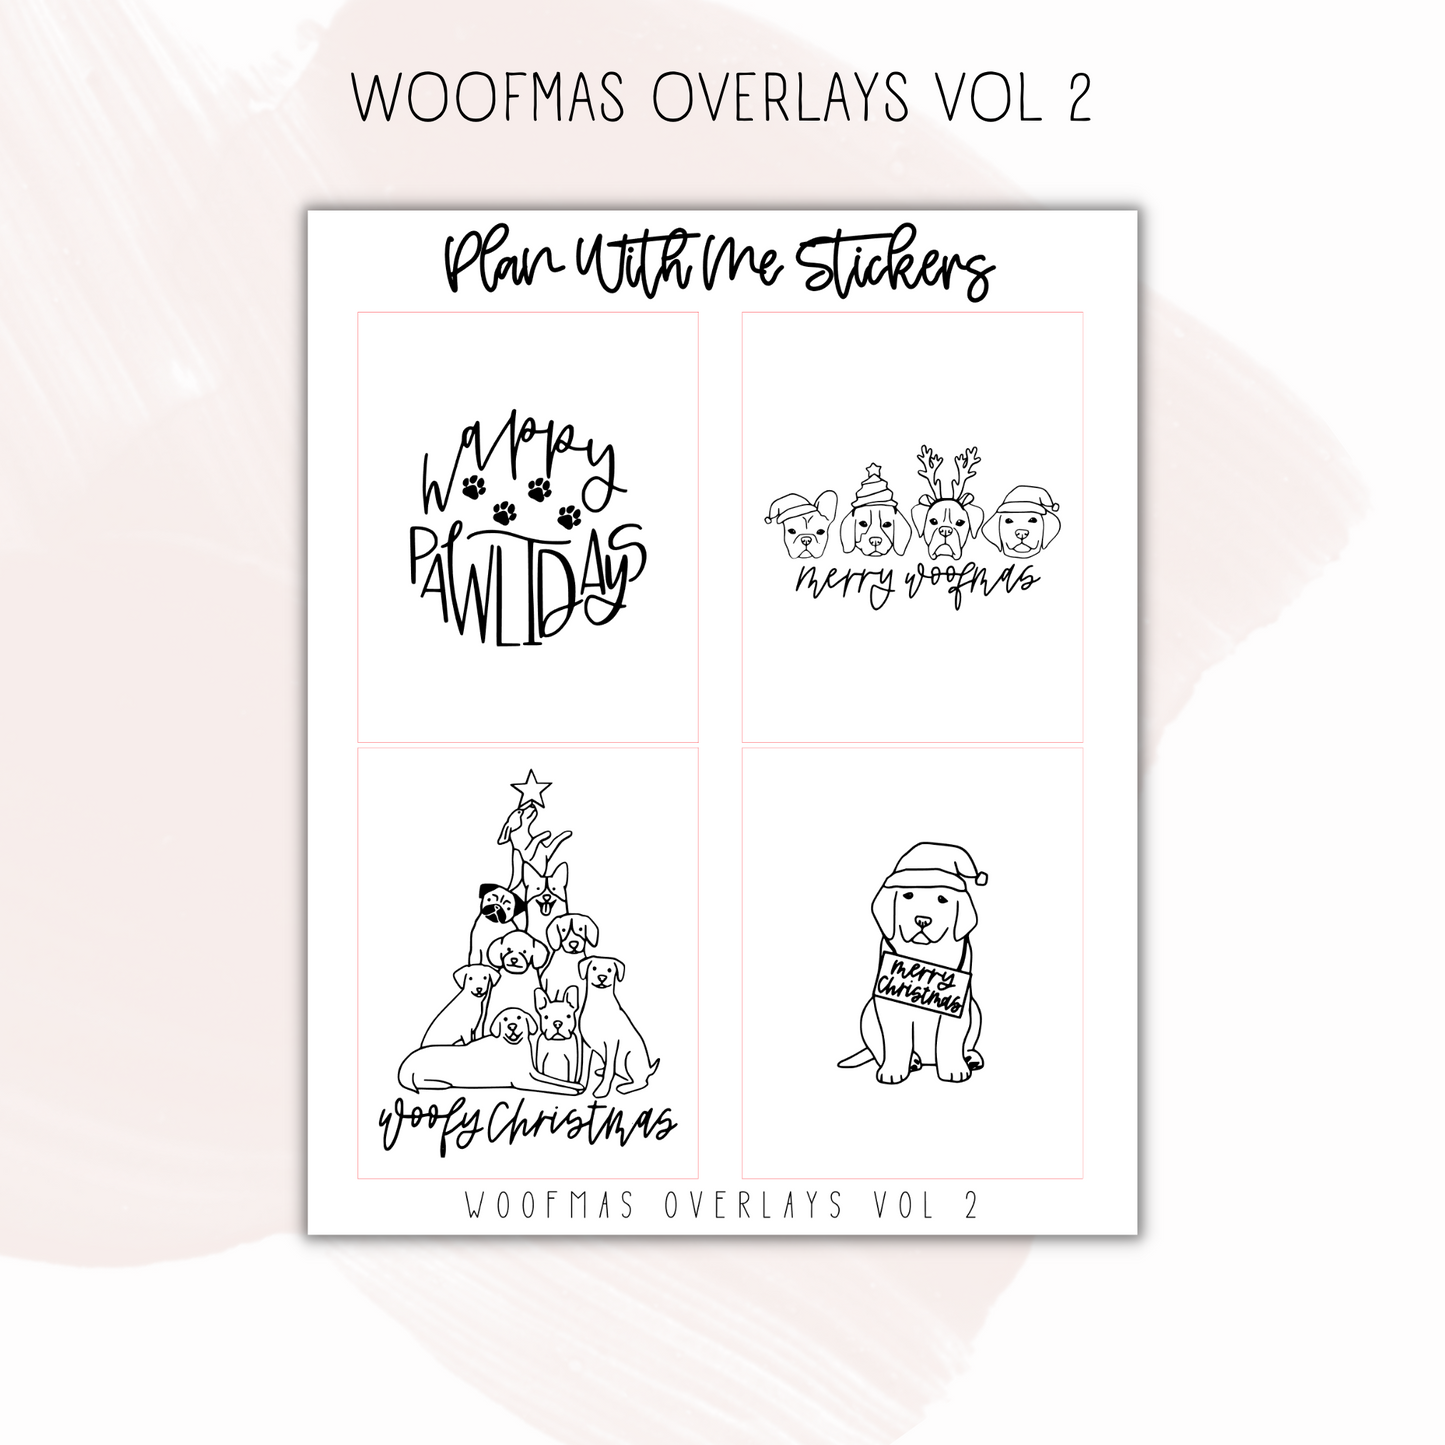 Woofmas Overlays Vol 2